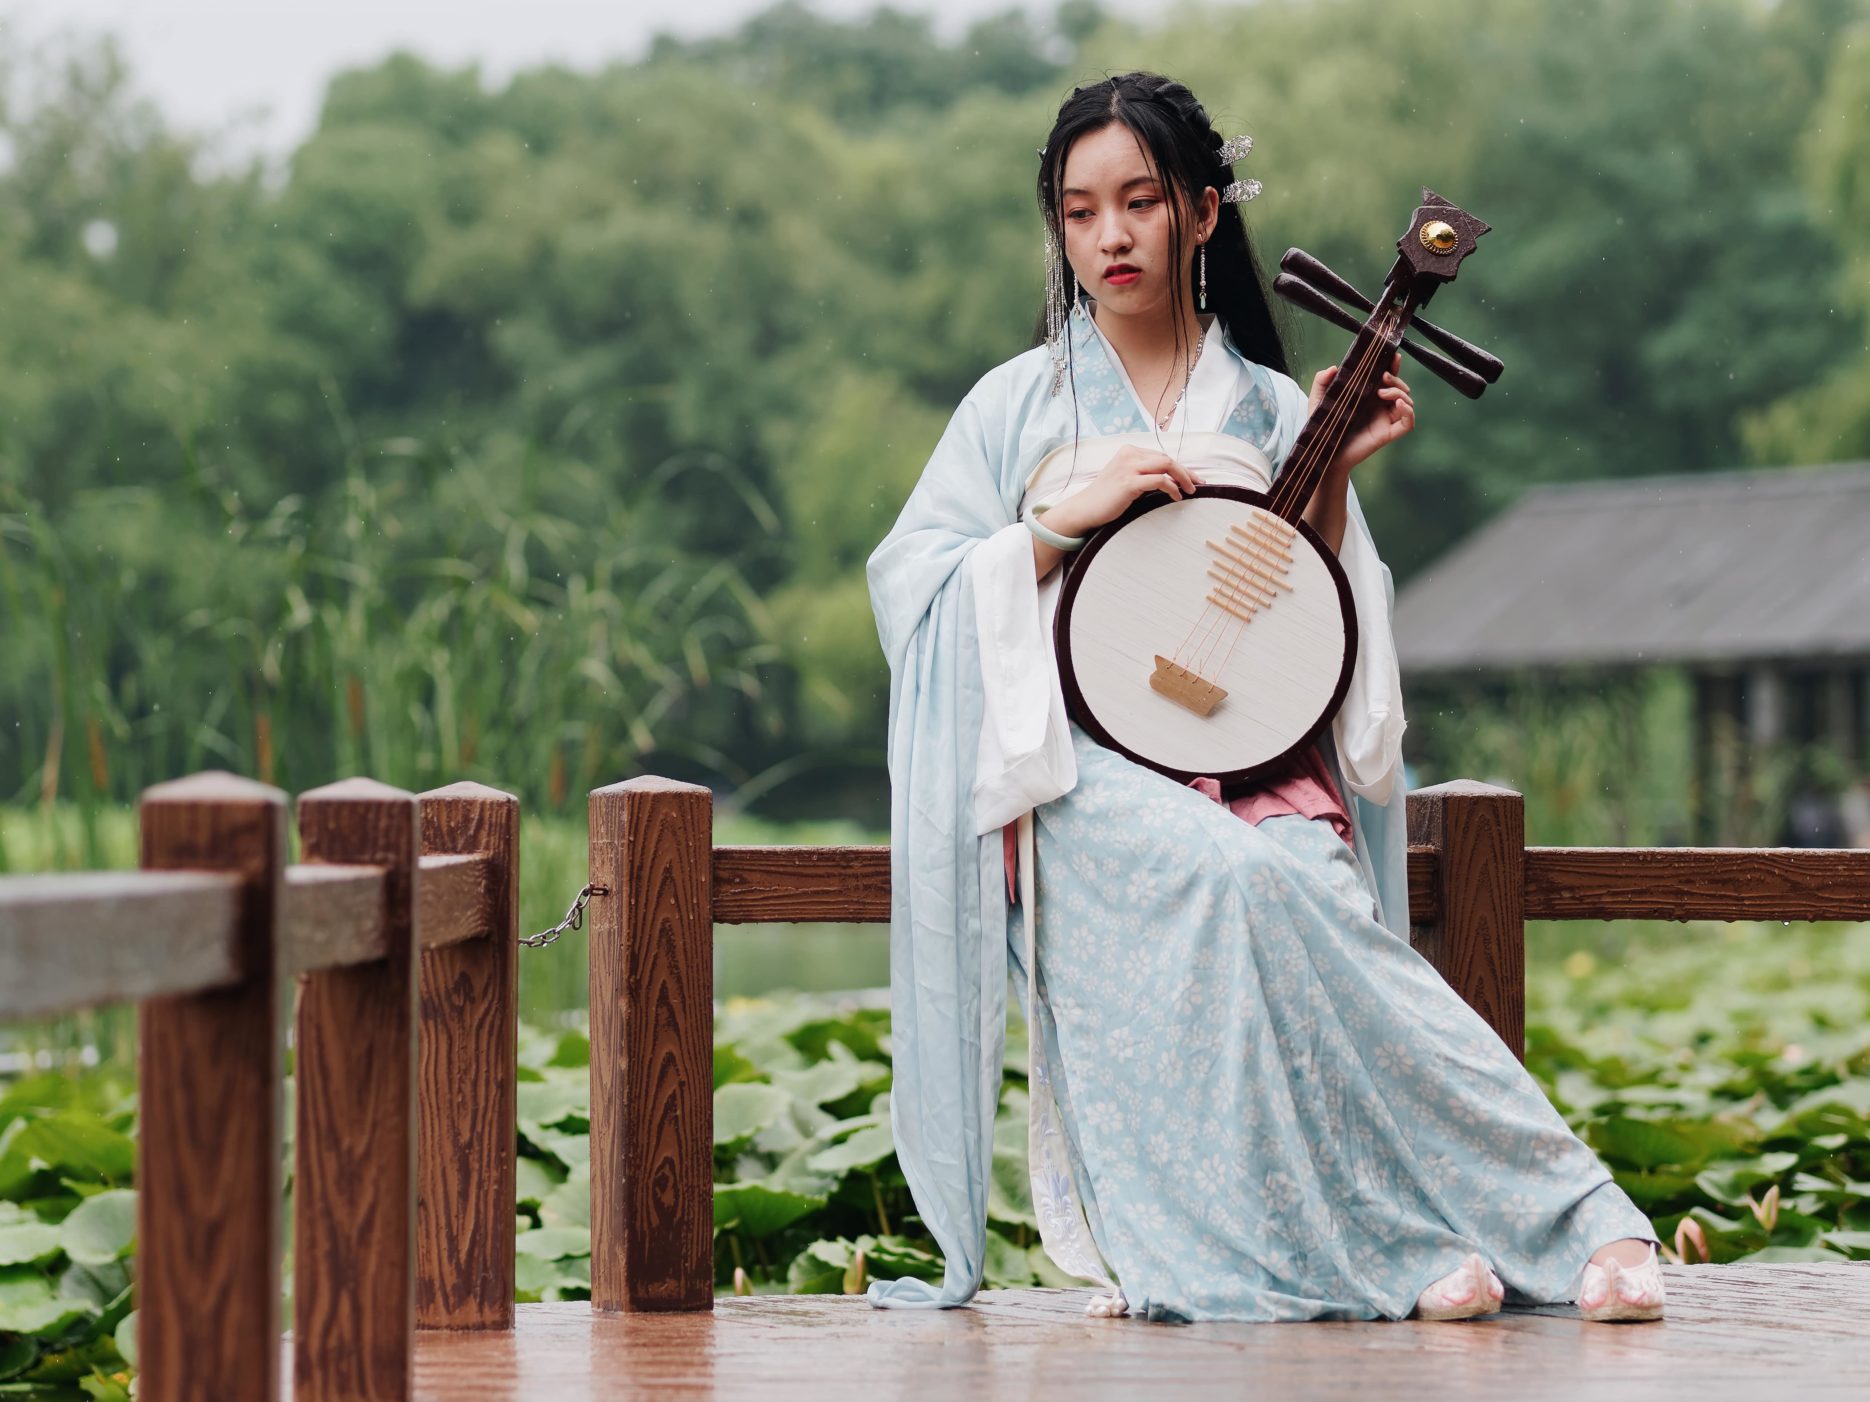 Traditional Chinese hanfu clothing. Credit: Adobe Stock.